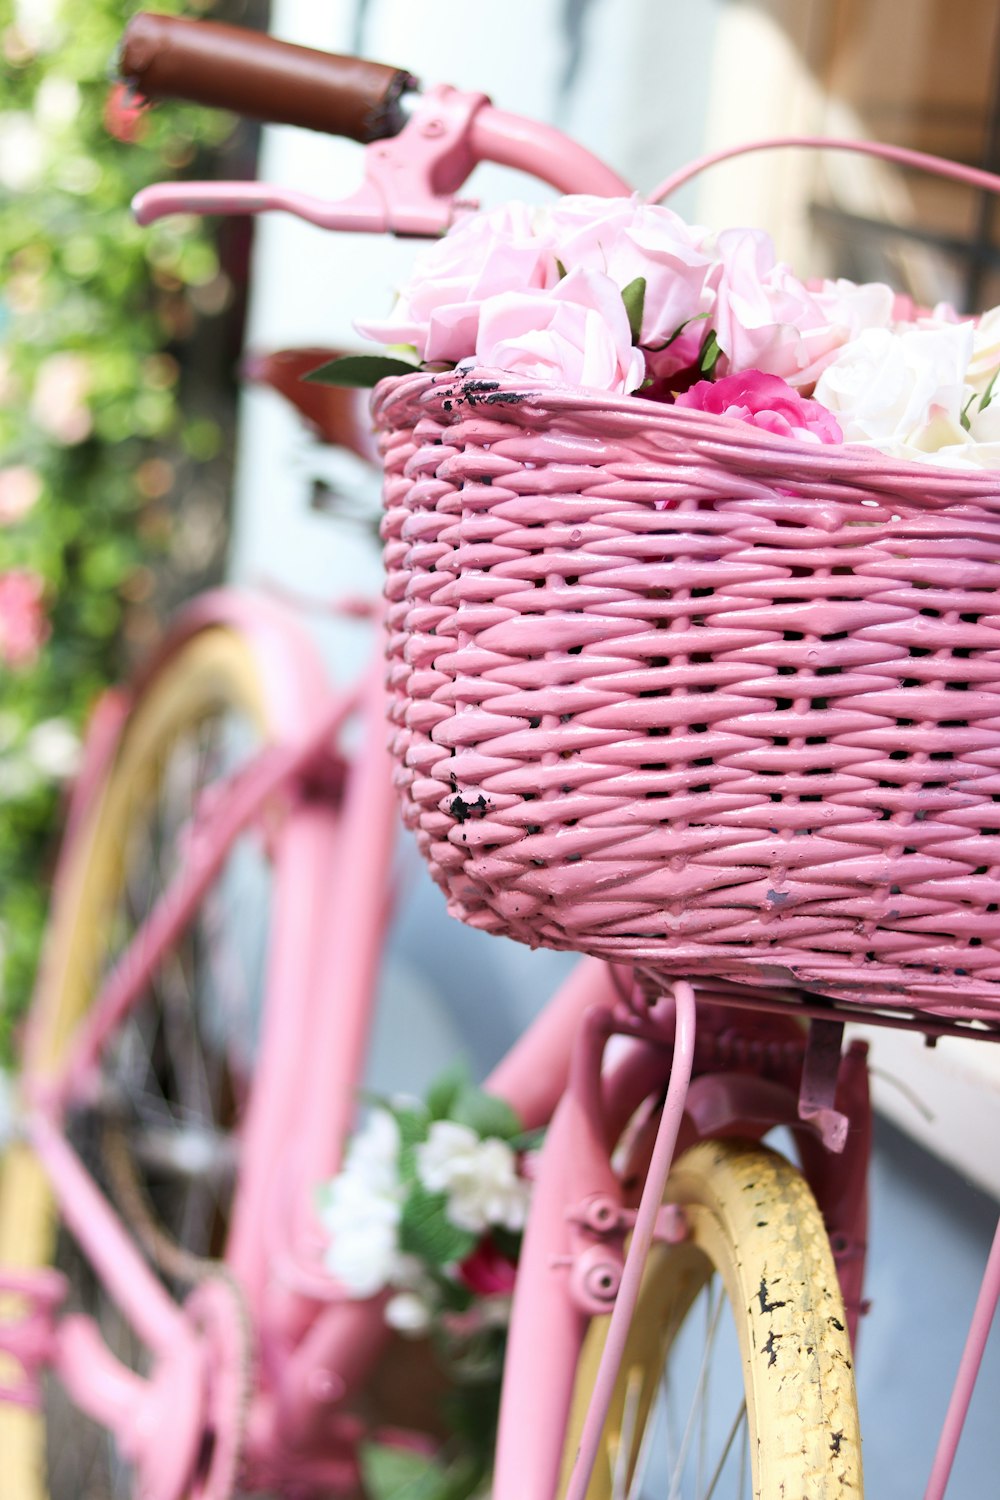 rosa geflochtener Korb auf gelbem Fahrrad